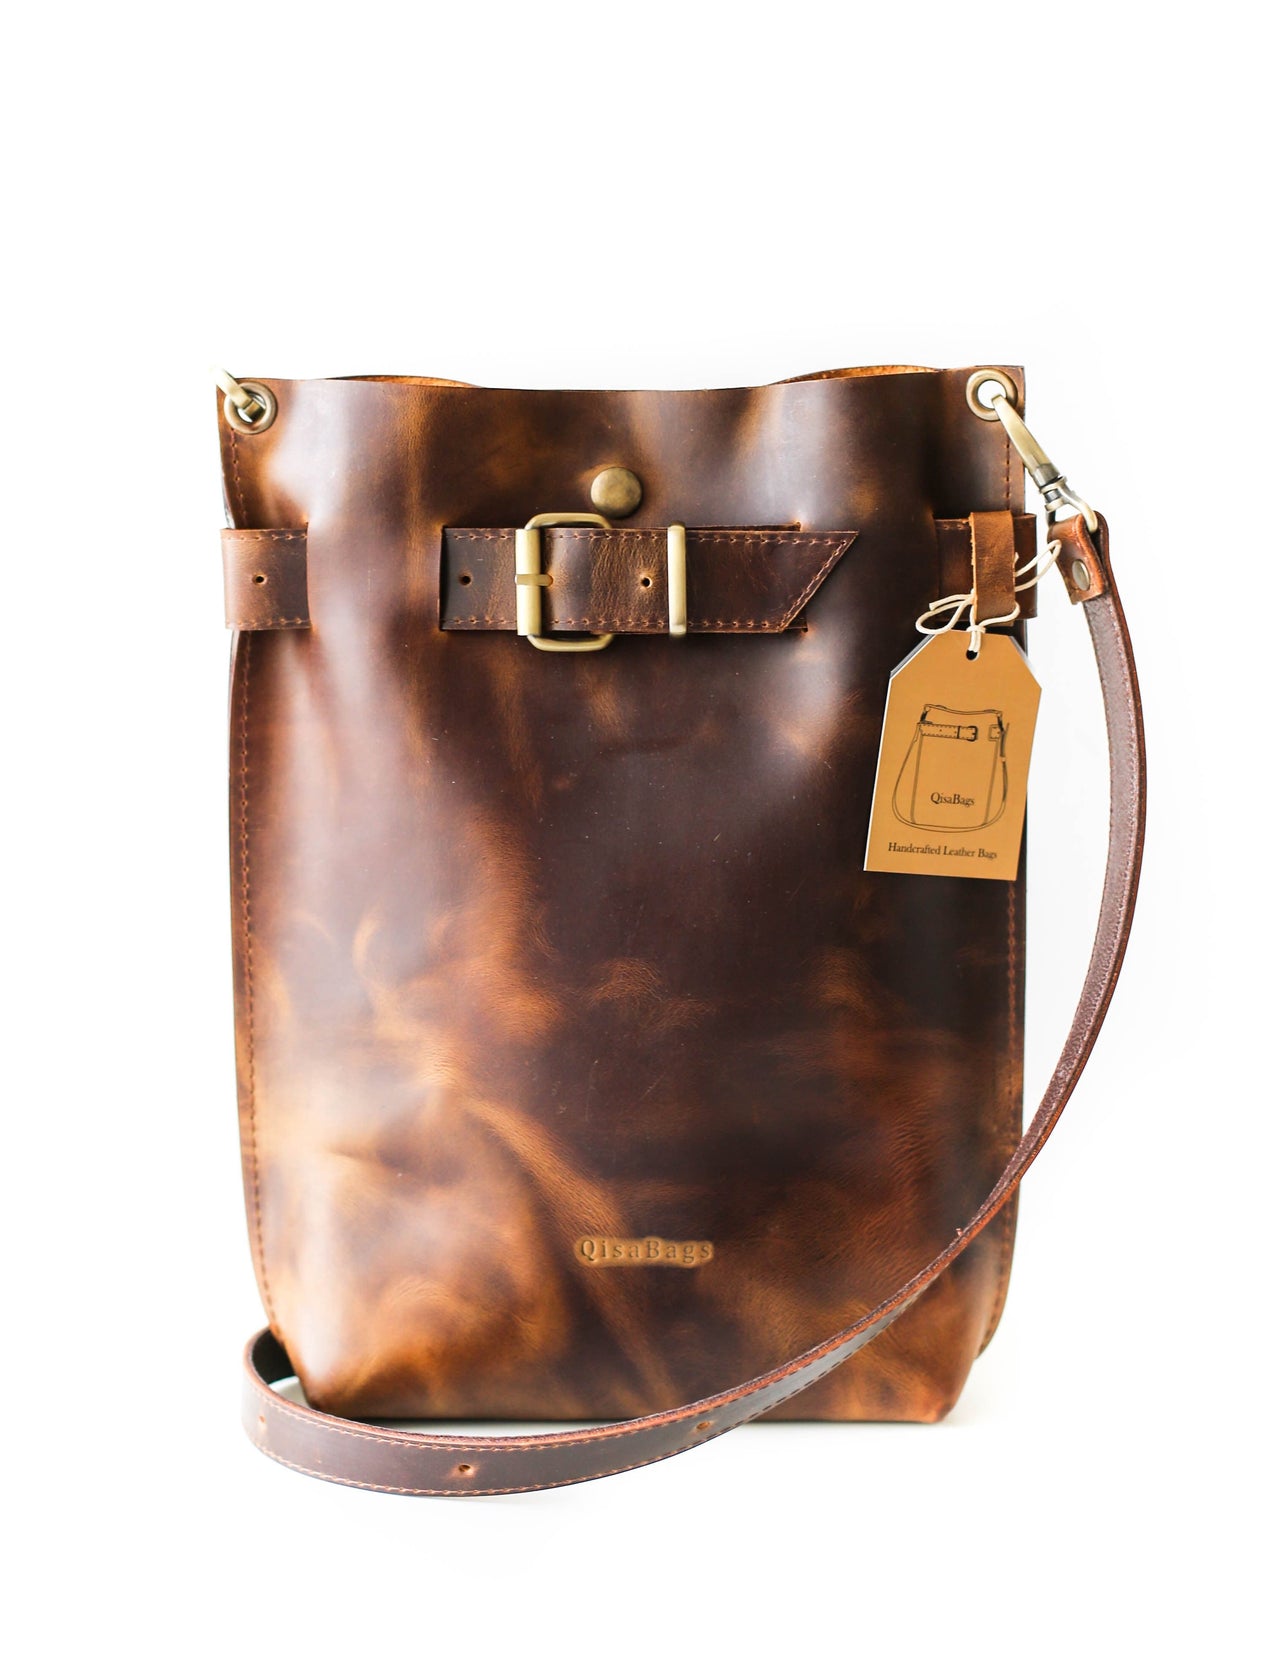 Handmade Brown Leather Bag, vintage leather backpack